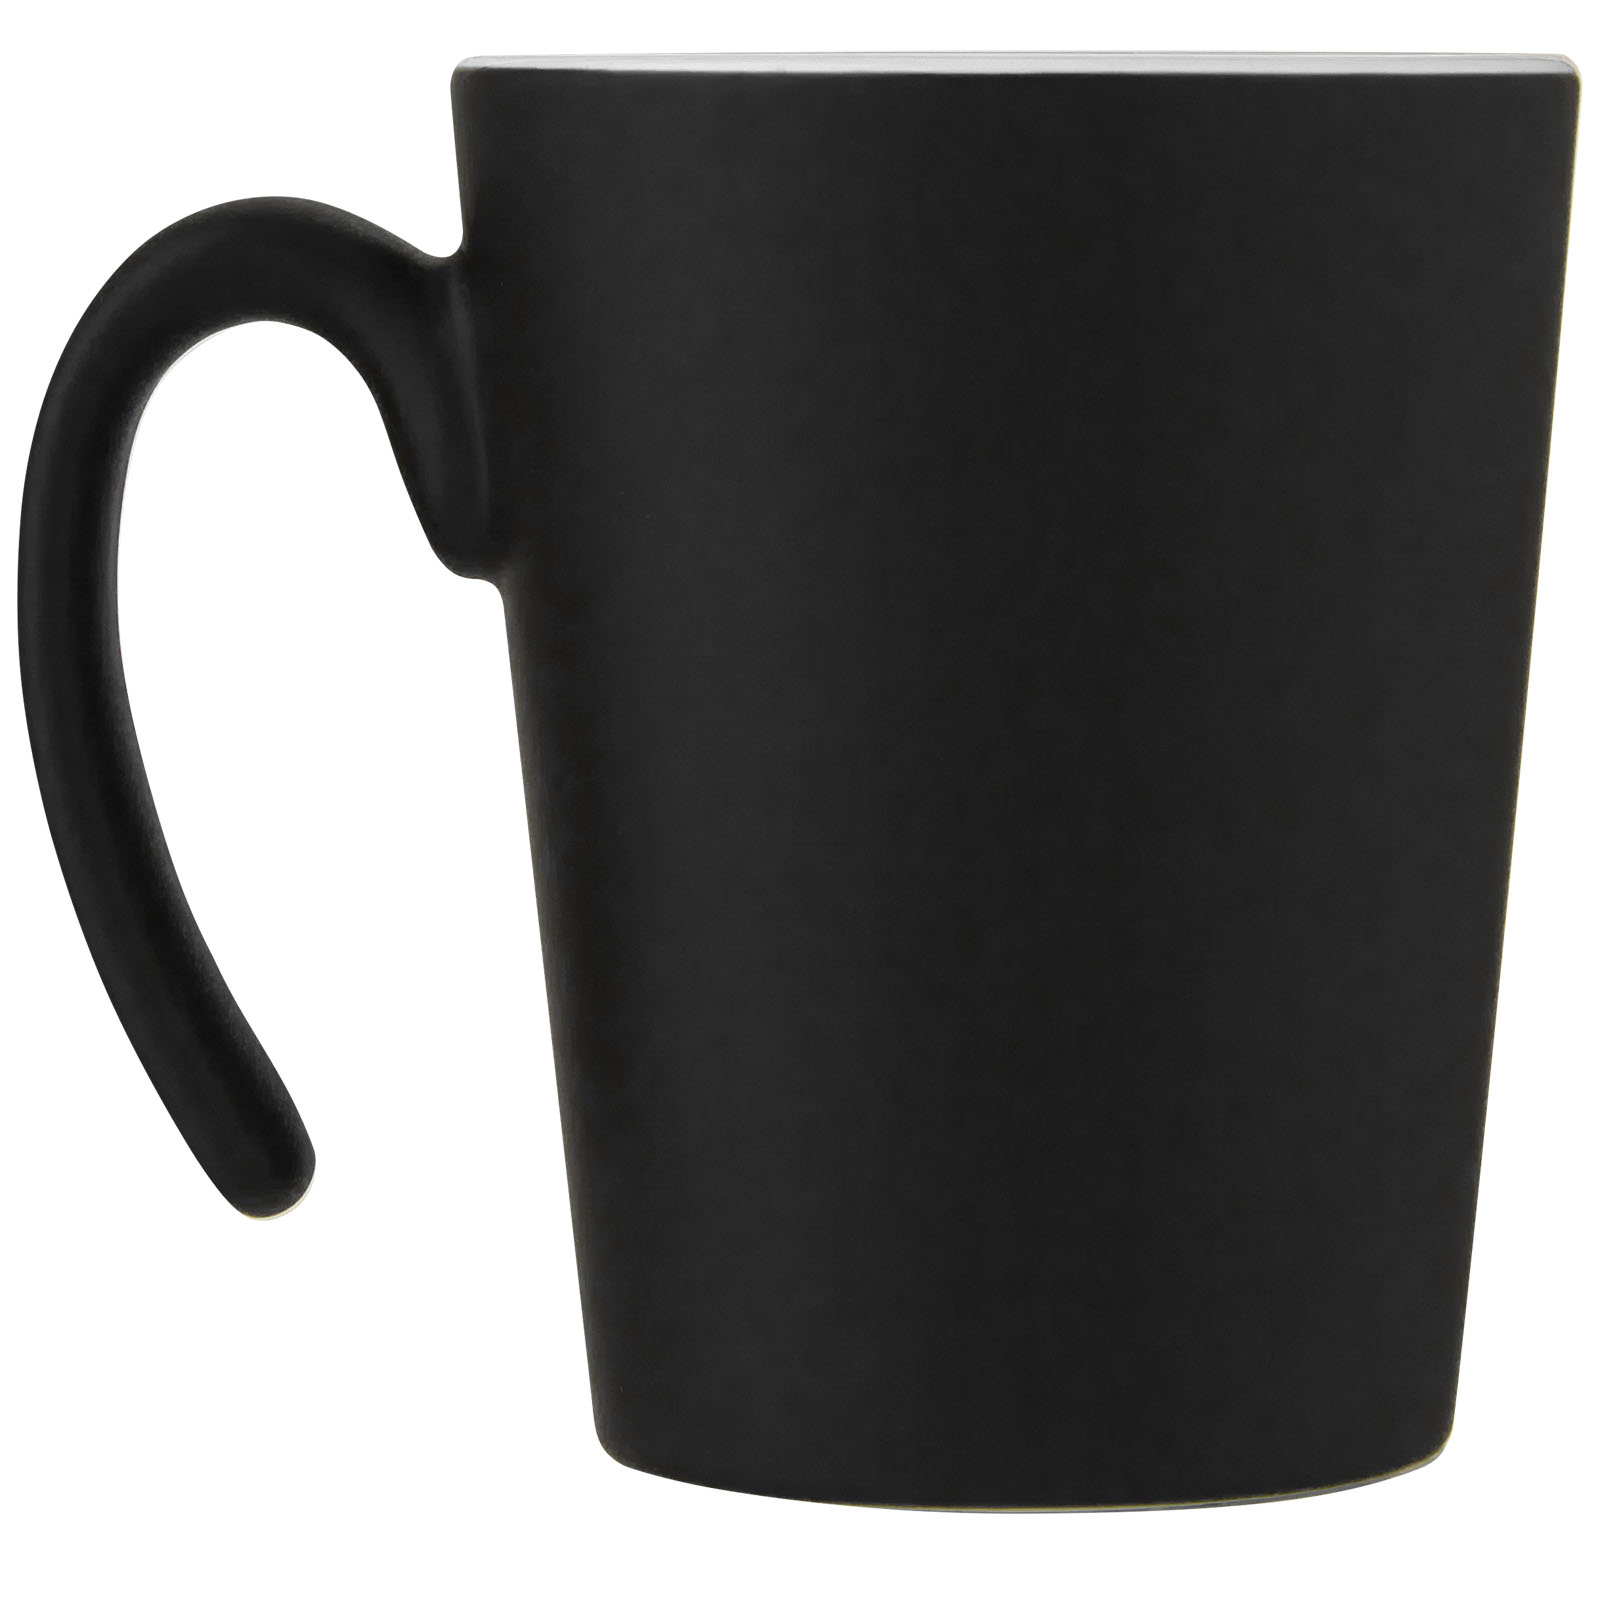 Advertising Standard mugs - Oli 360 ml ceramic mug with handle - 2